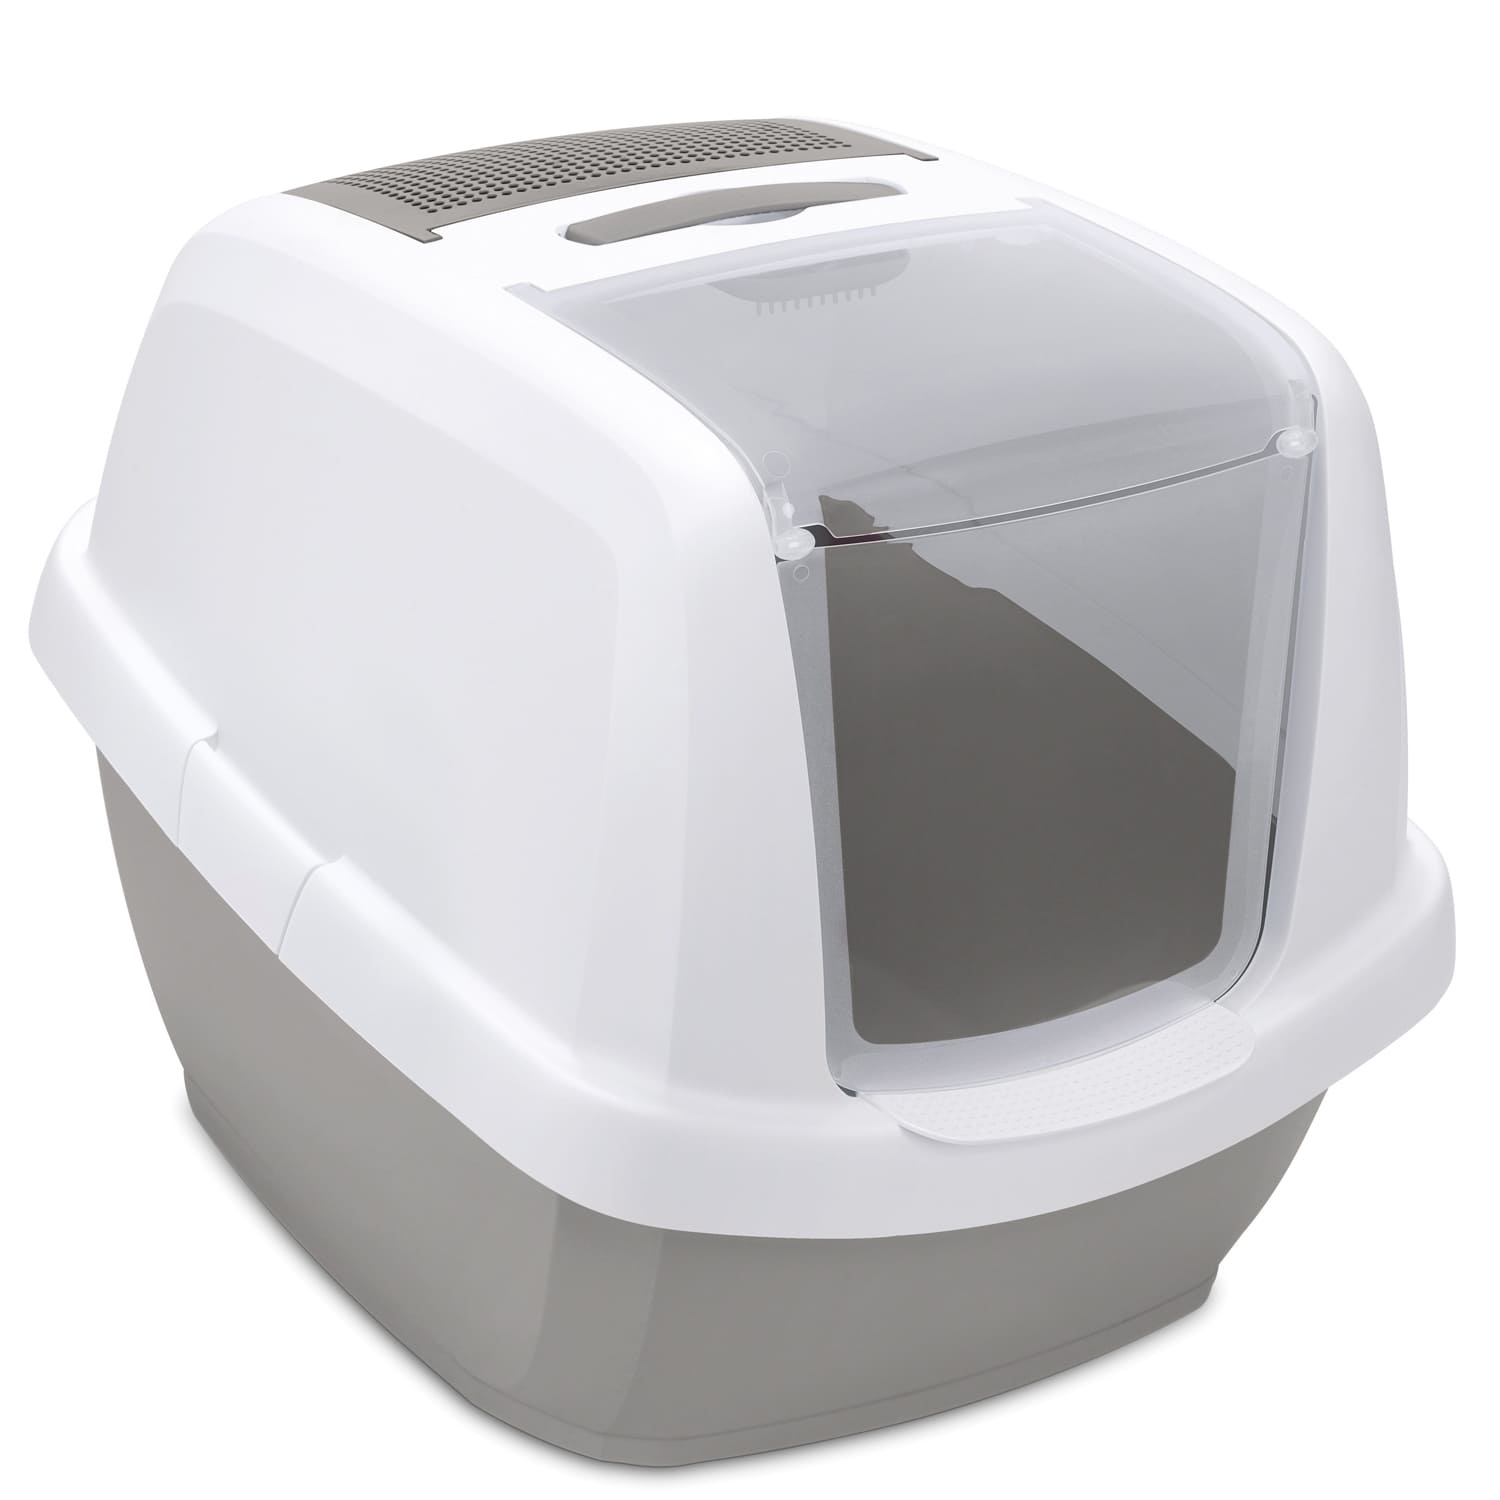 IMAC IMAC био-туалет для кошек , белый/бежевый (2,85 кг) imac imac био туалет для кошек белый бежевый 2 85 кг